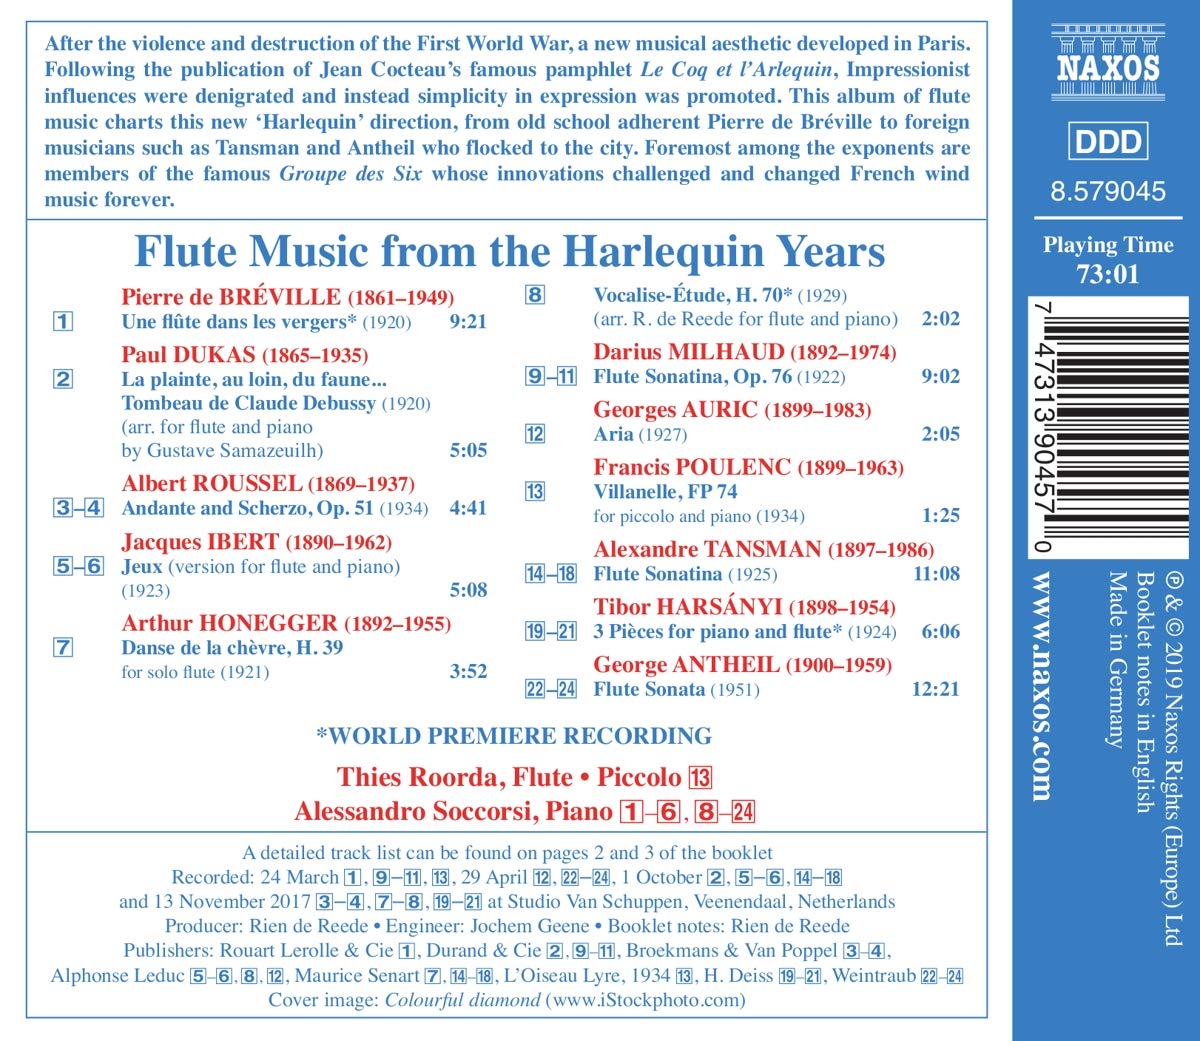 Thies Roorda 프랑스 플루트 소나타 작품집 (Flute Music from the Harlequin Years)